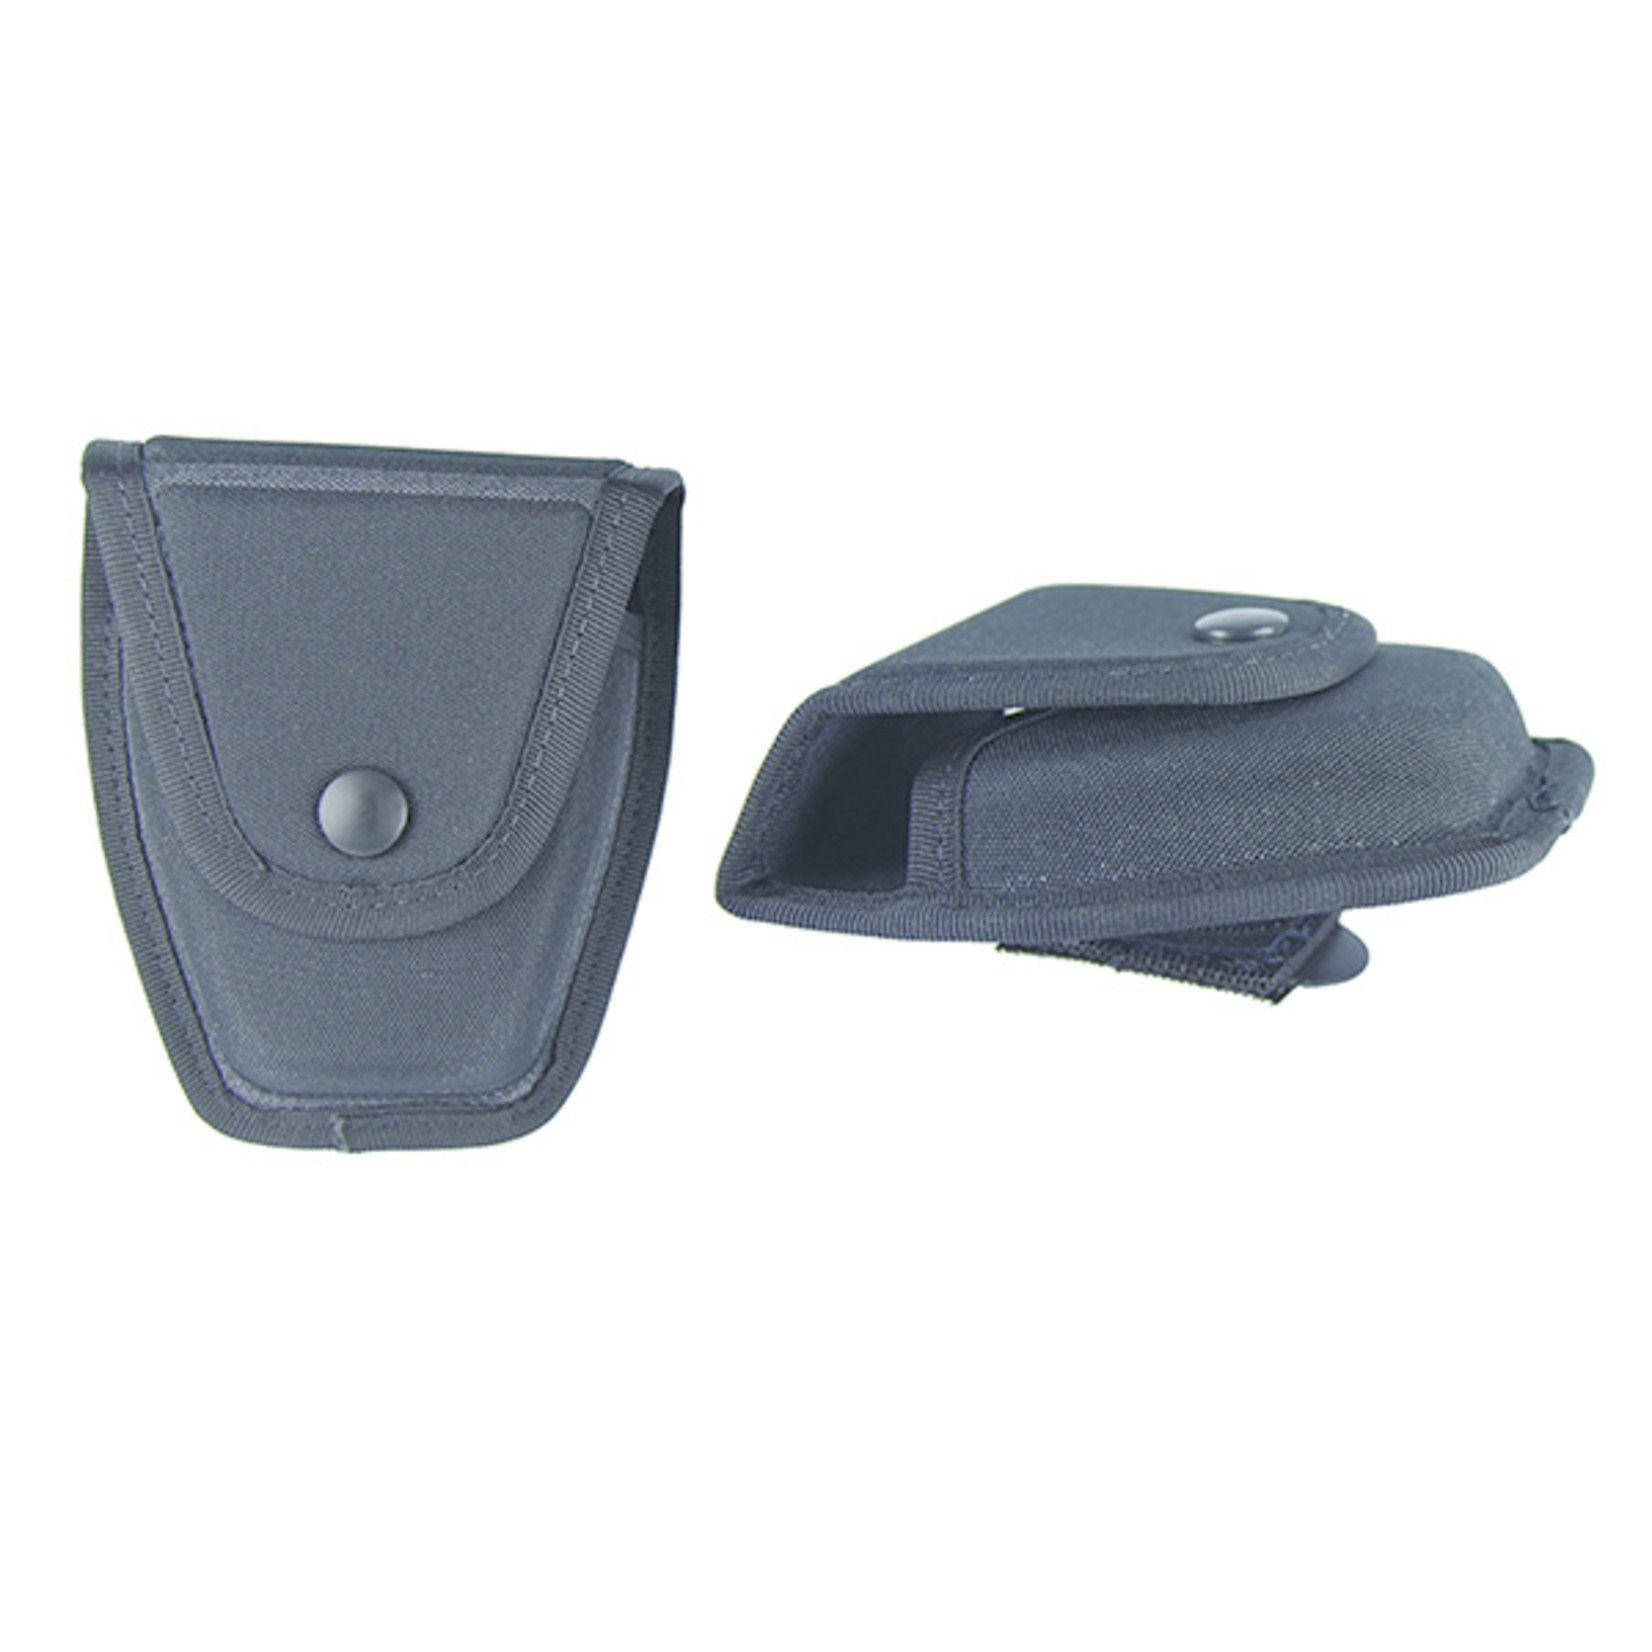 hi tec intervention Hi -Tec DS505 Molded pouch for Regular Hand Cuff